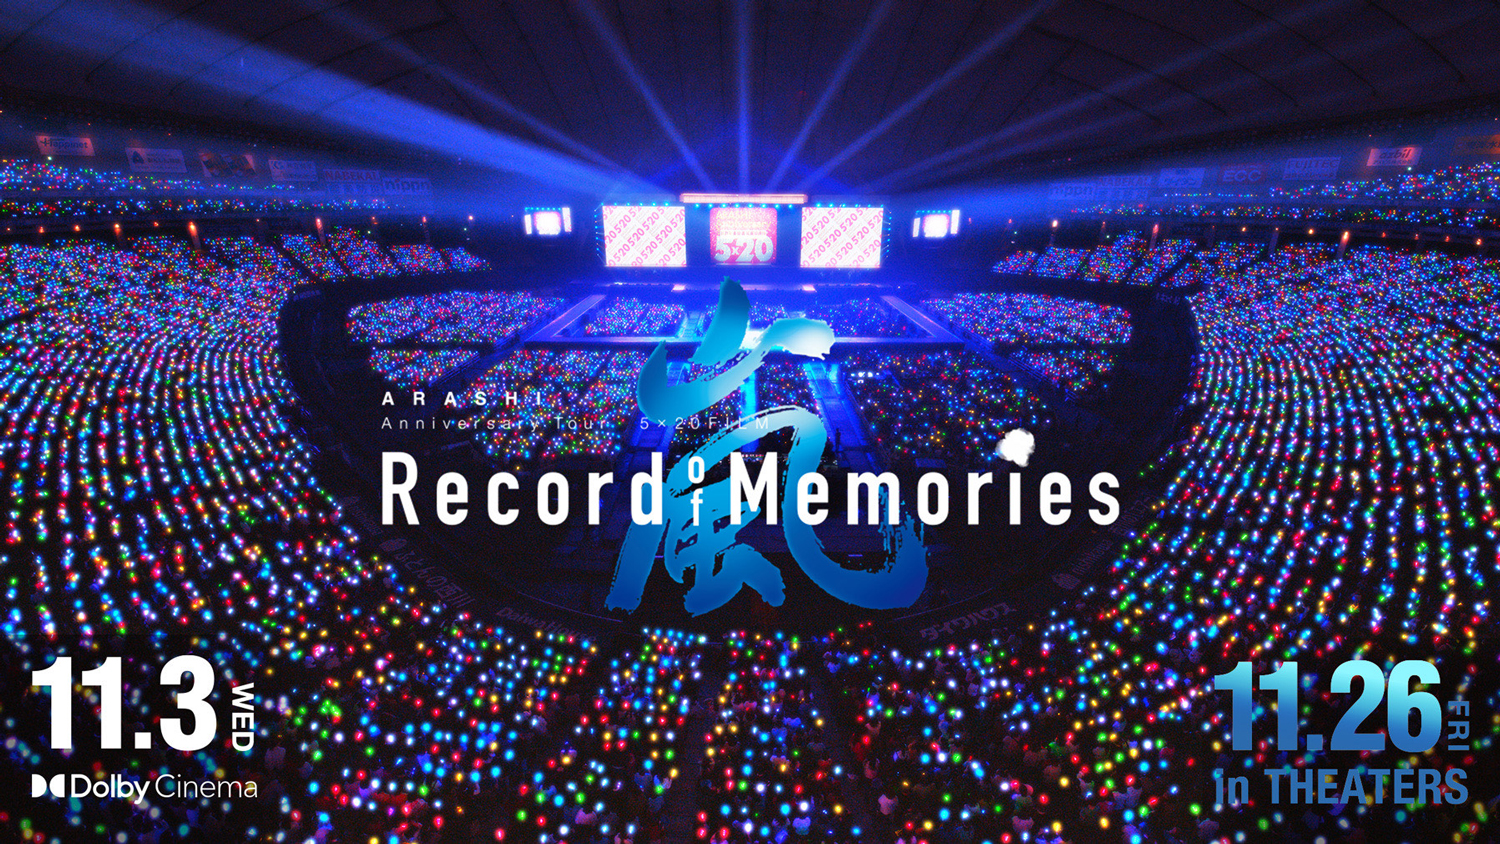 Arashi Anniversary Tour 5 Film Record Of Memories